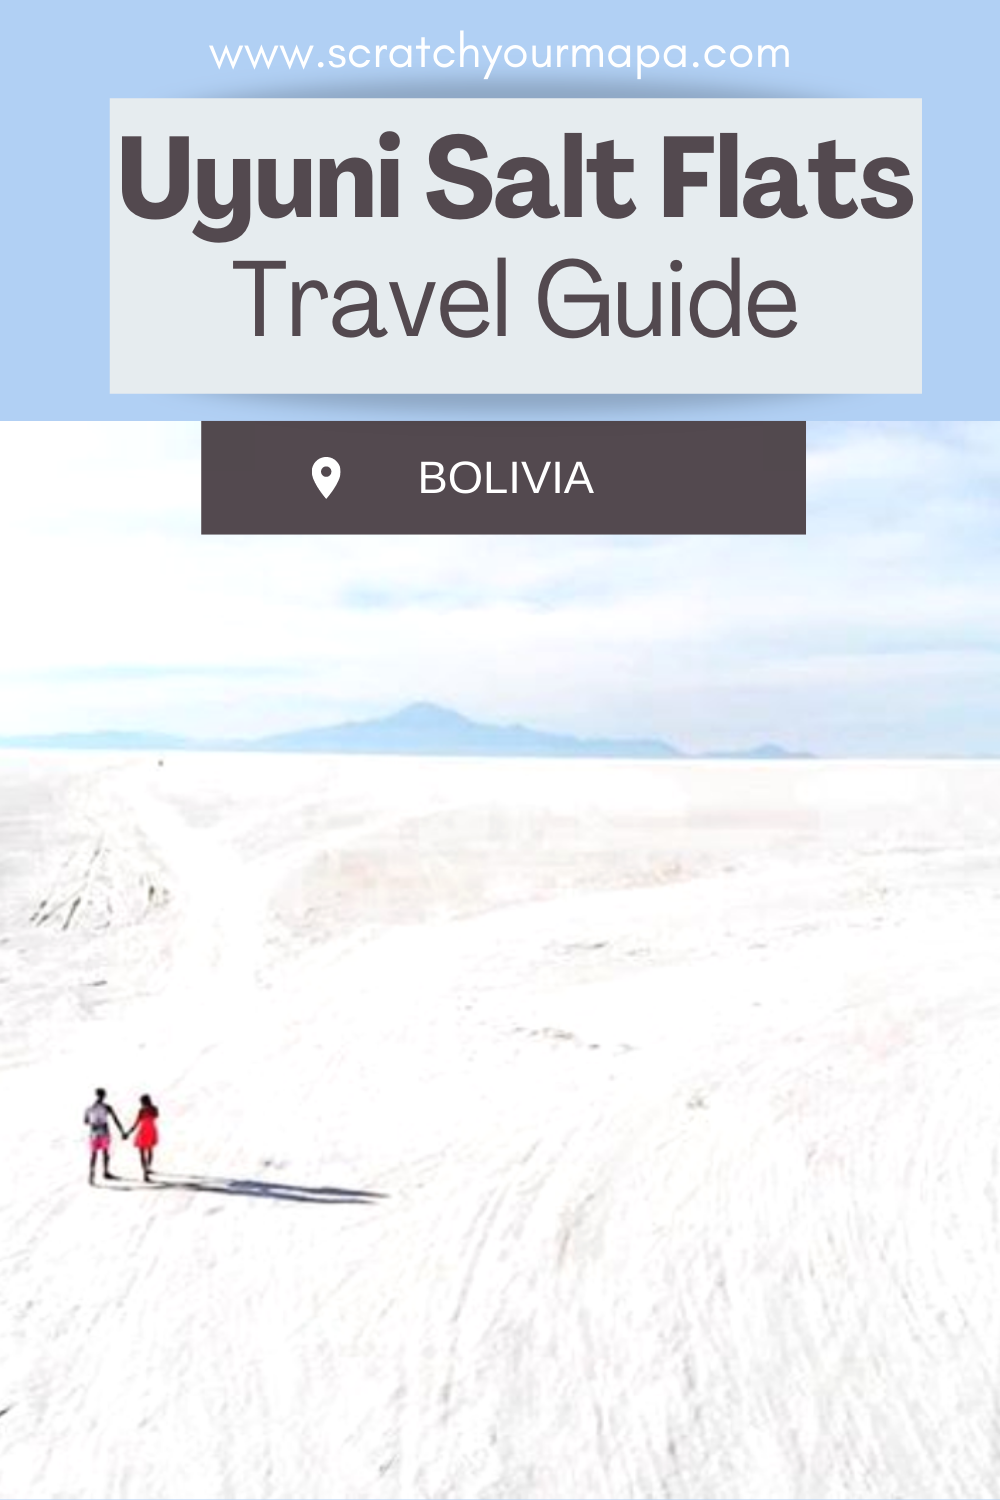 Uyuni salt flats in Bolivia Pin